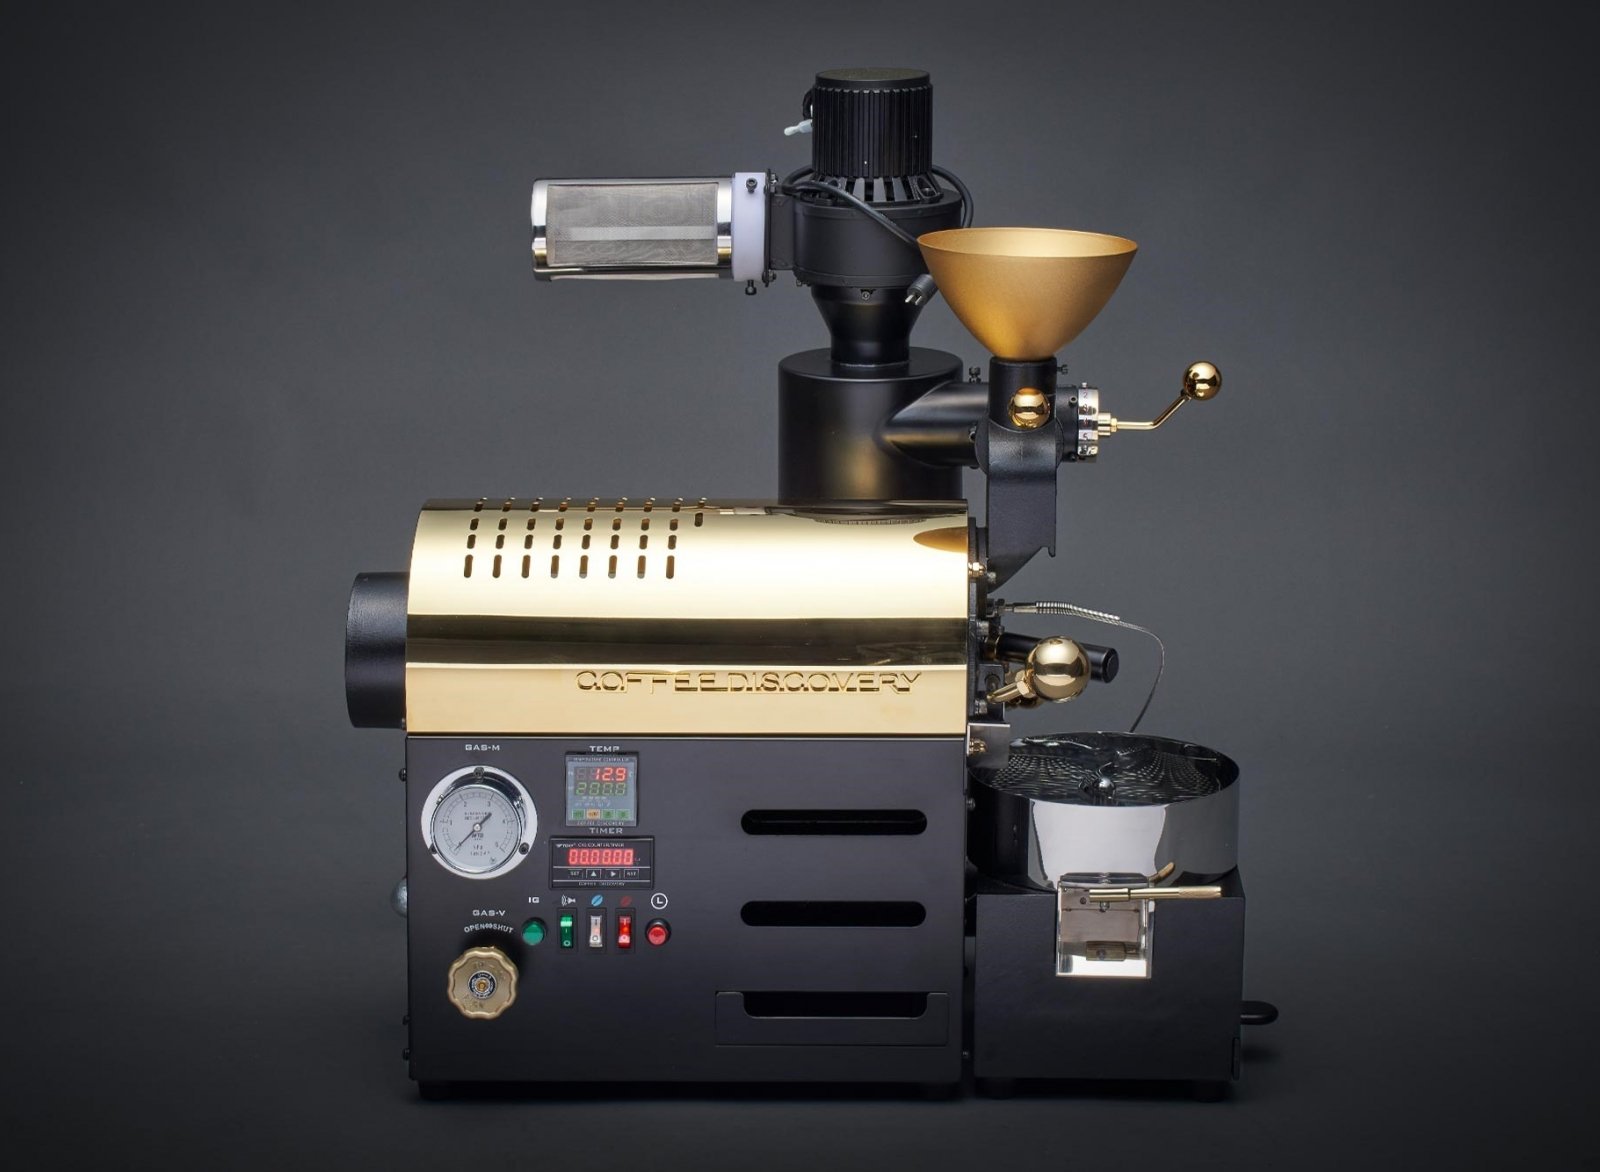 coffee roaster 焙煎機 - コーヒーメーカー